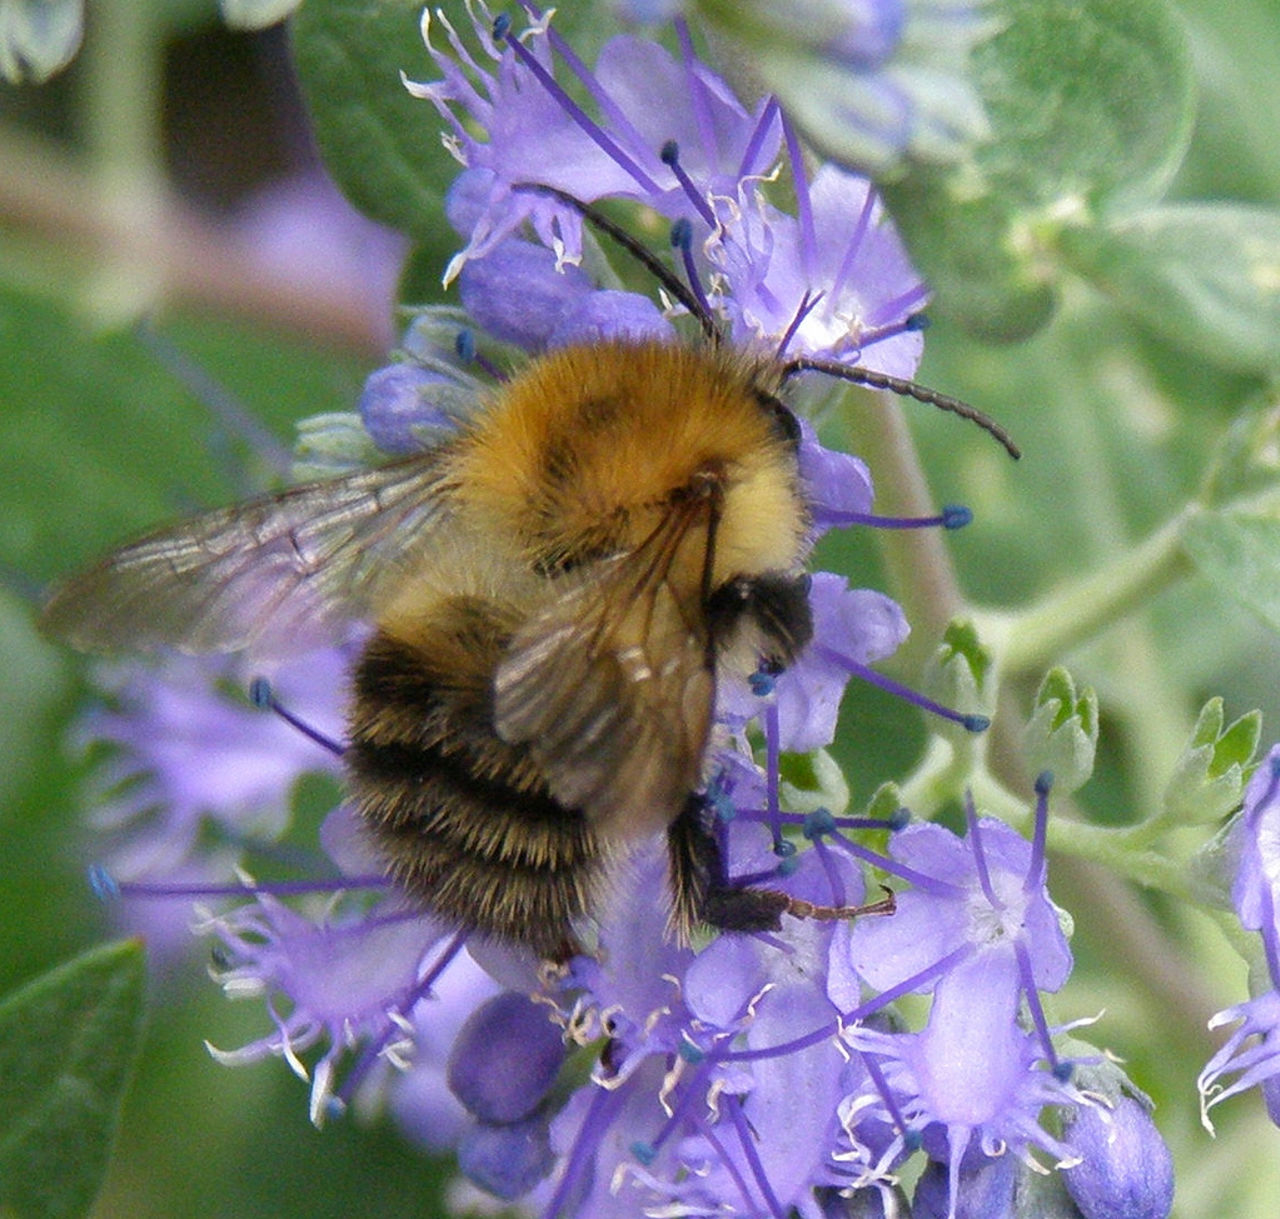 Irish wild bee on a lavender flower